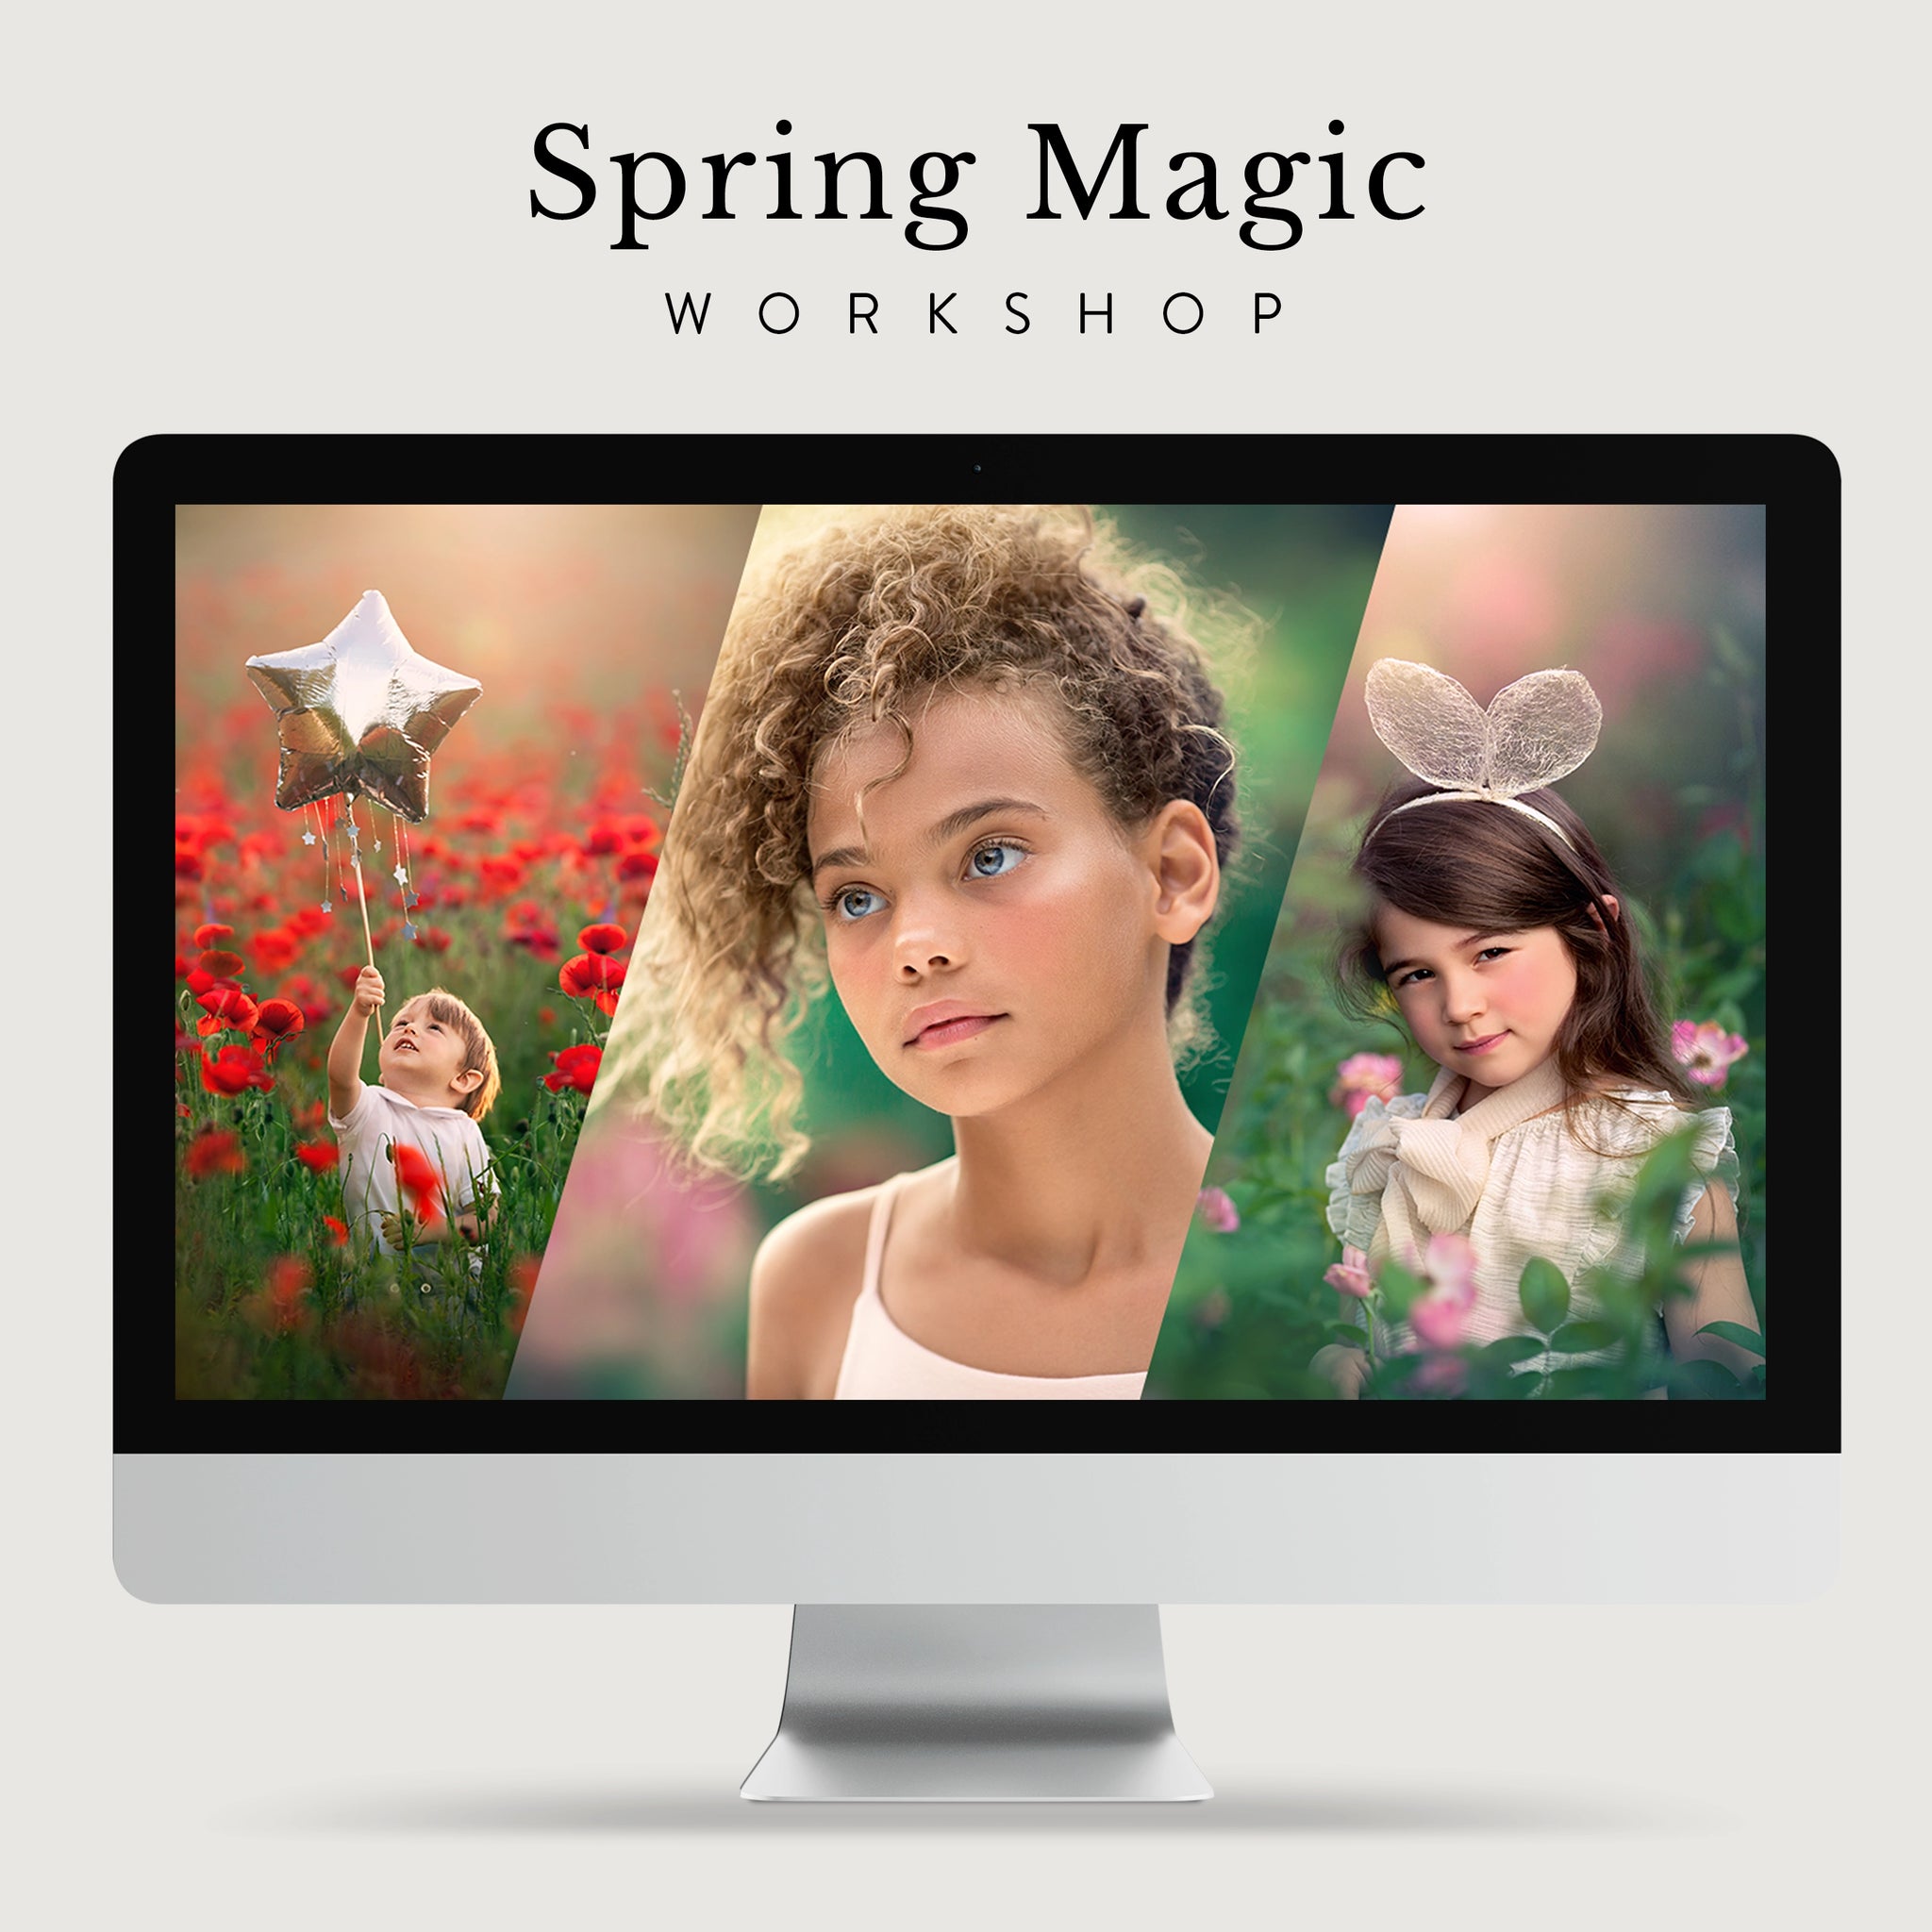 Spring Magic Workshop